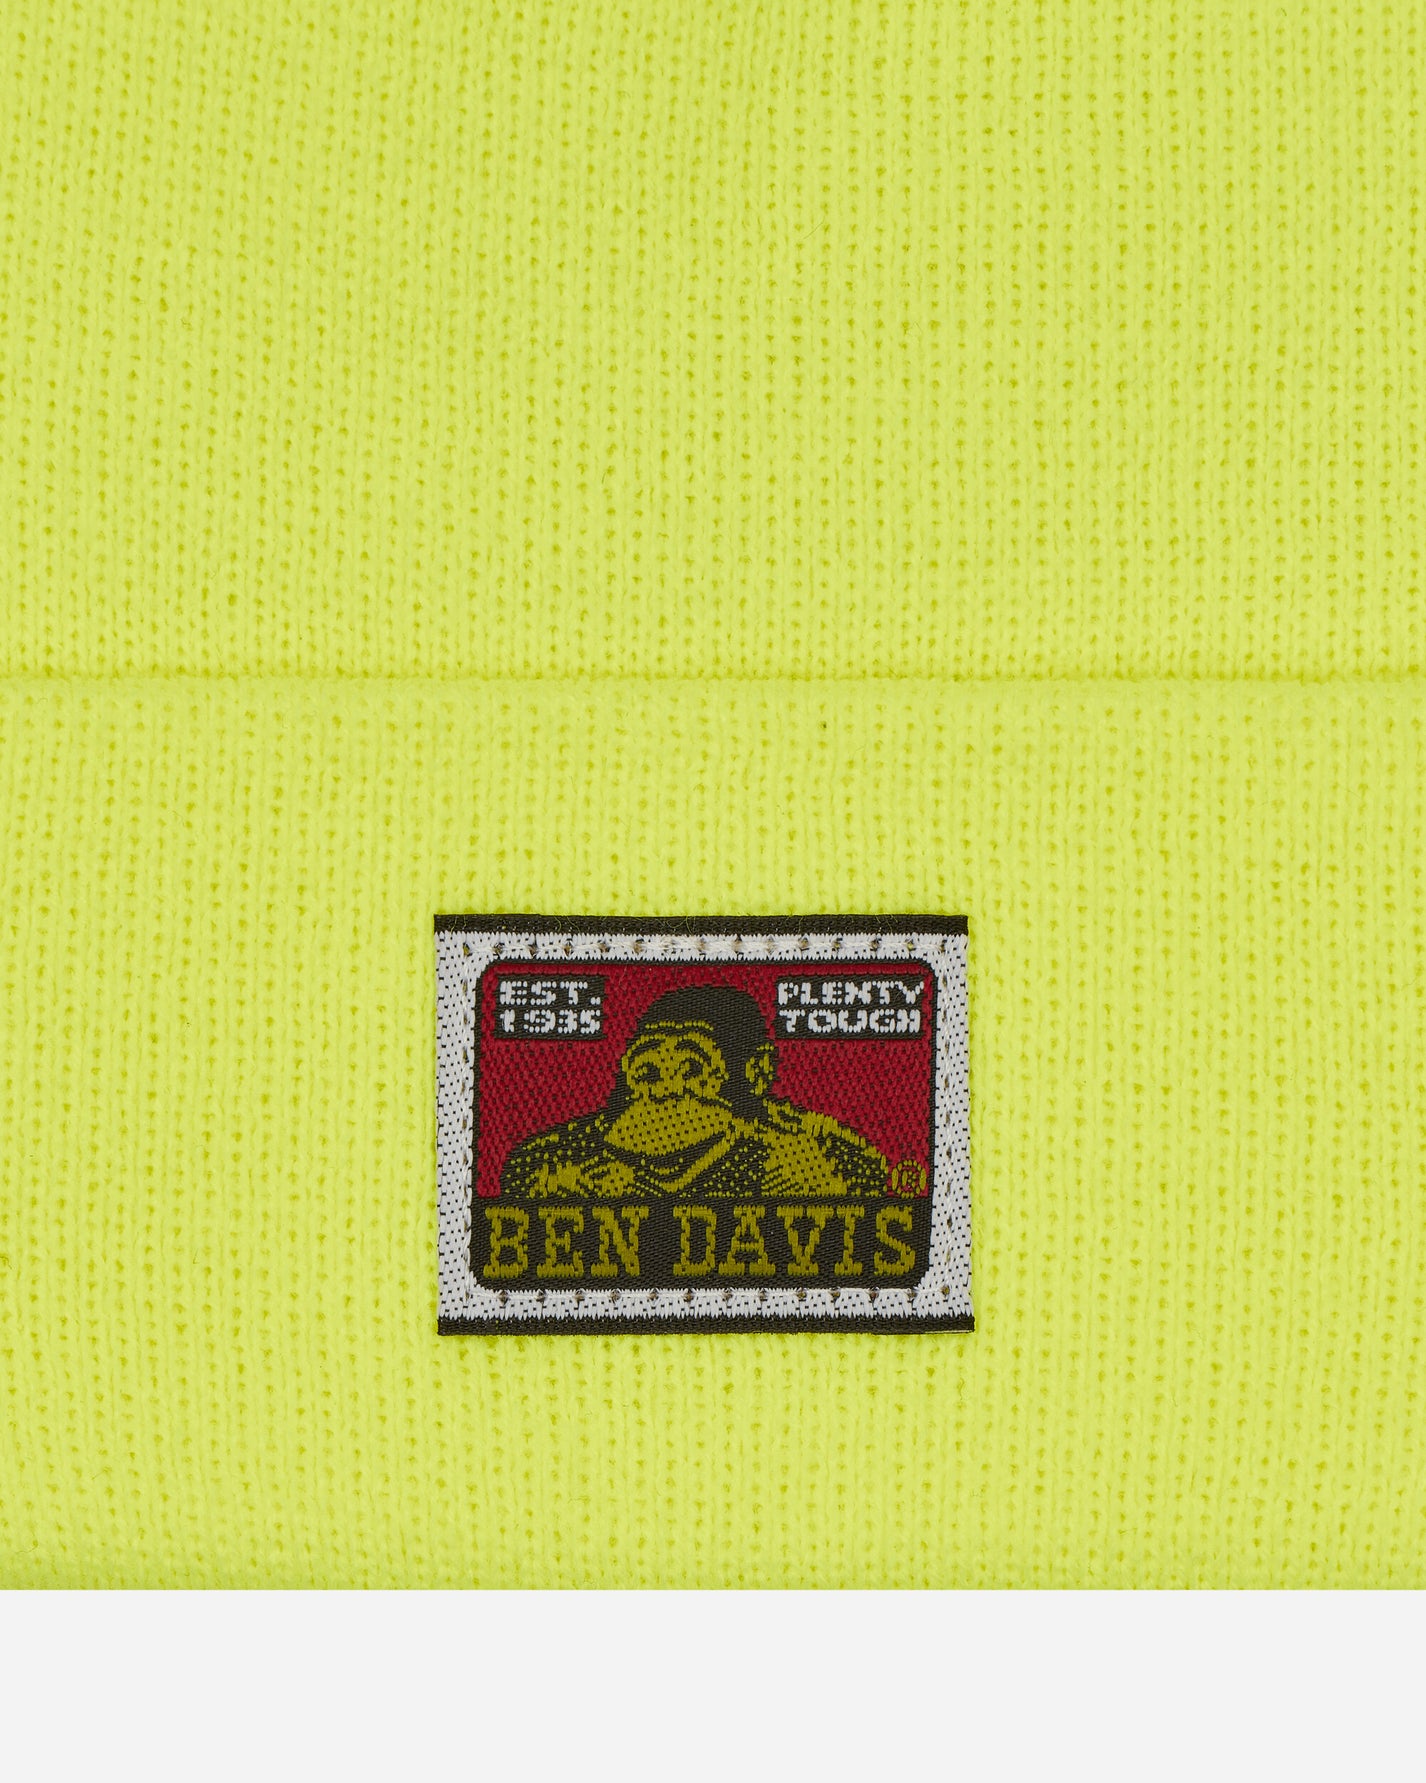 Ben Davis Beanie W Logo Safety Yellow Hats Beanies BEN9299 001